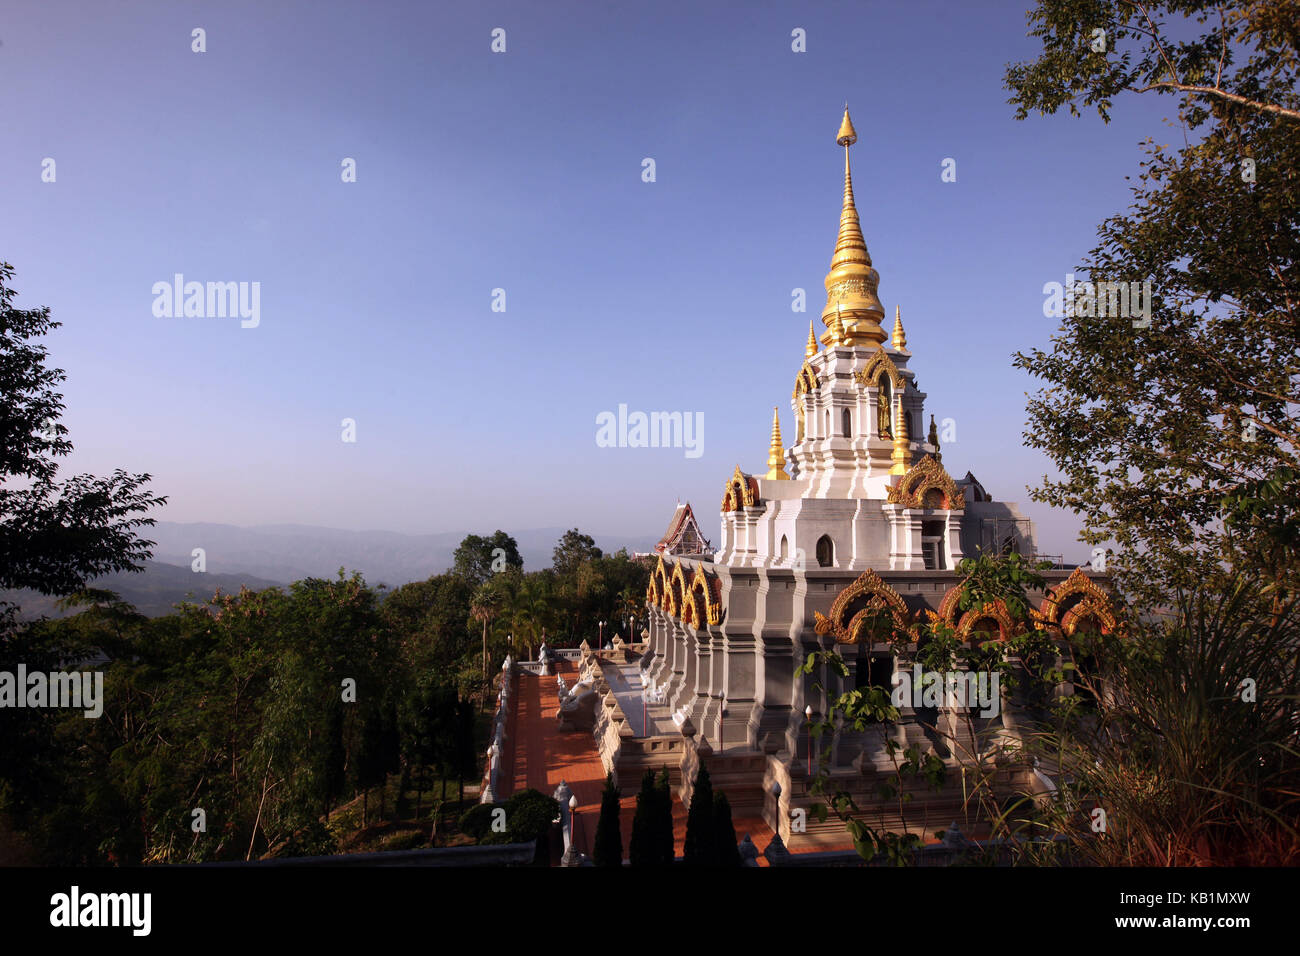 En Asia, el sudeste de Asia, Tailandia, Chiang Rai Mae Salong, región de té Foto de stock